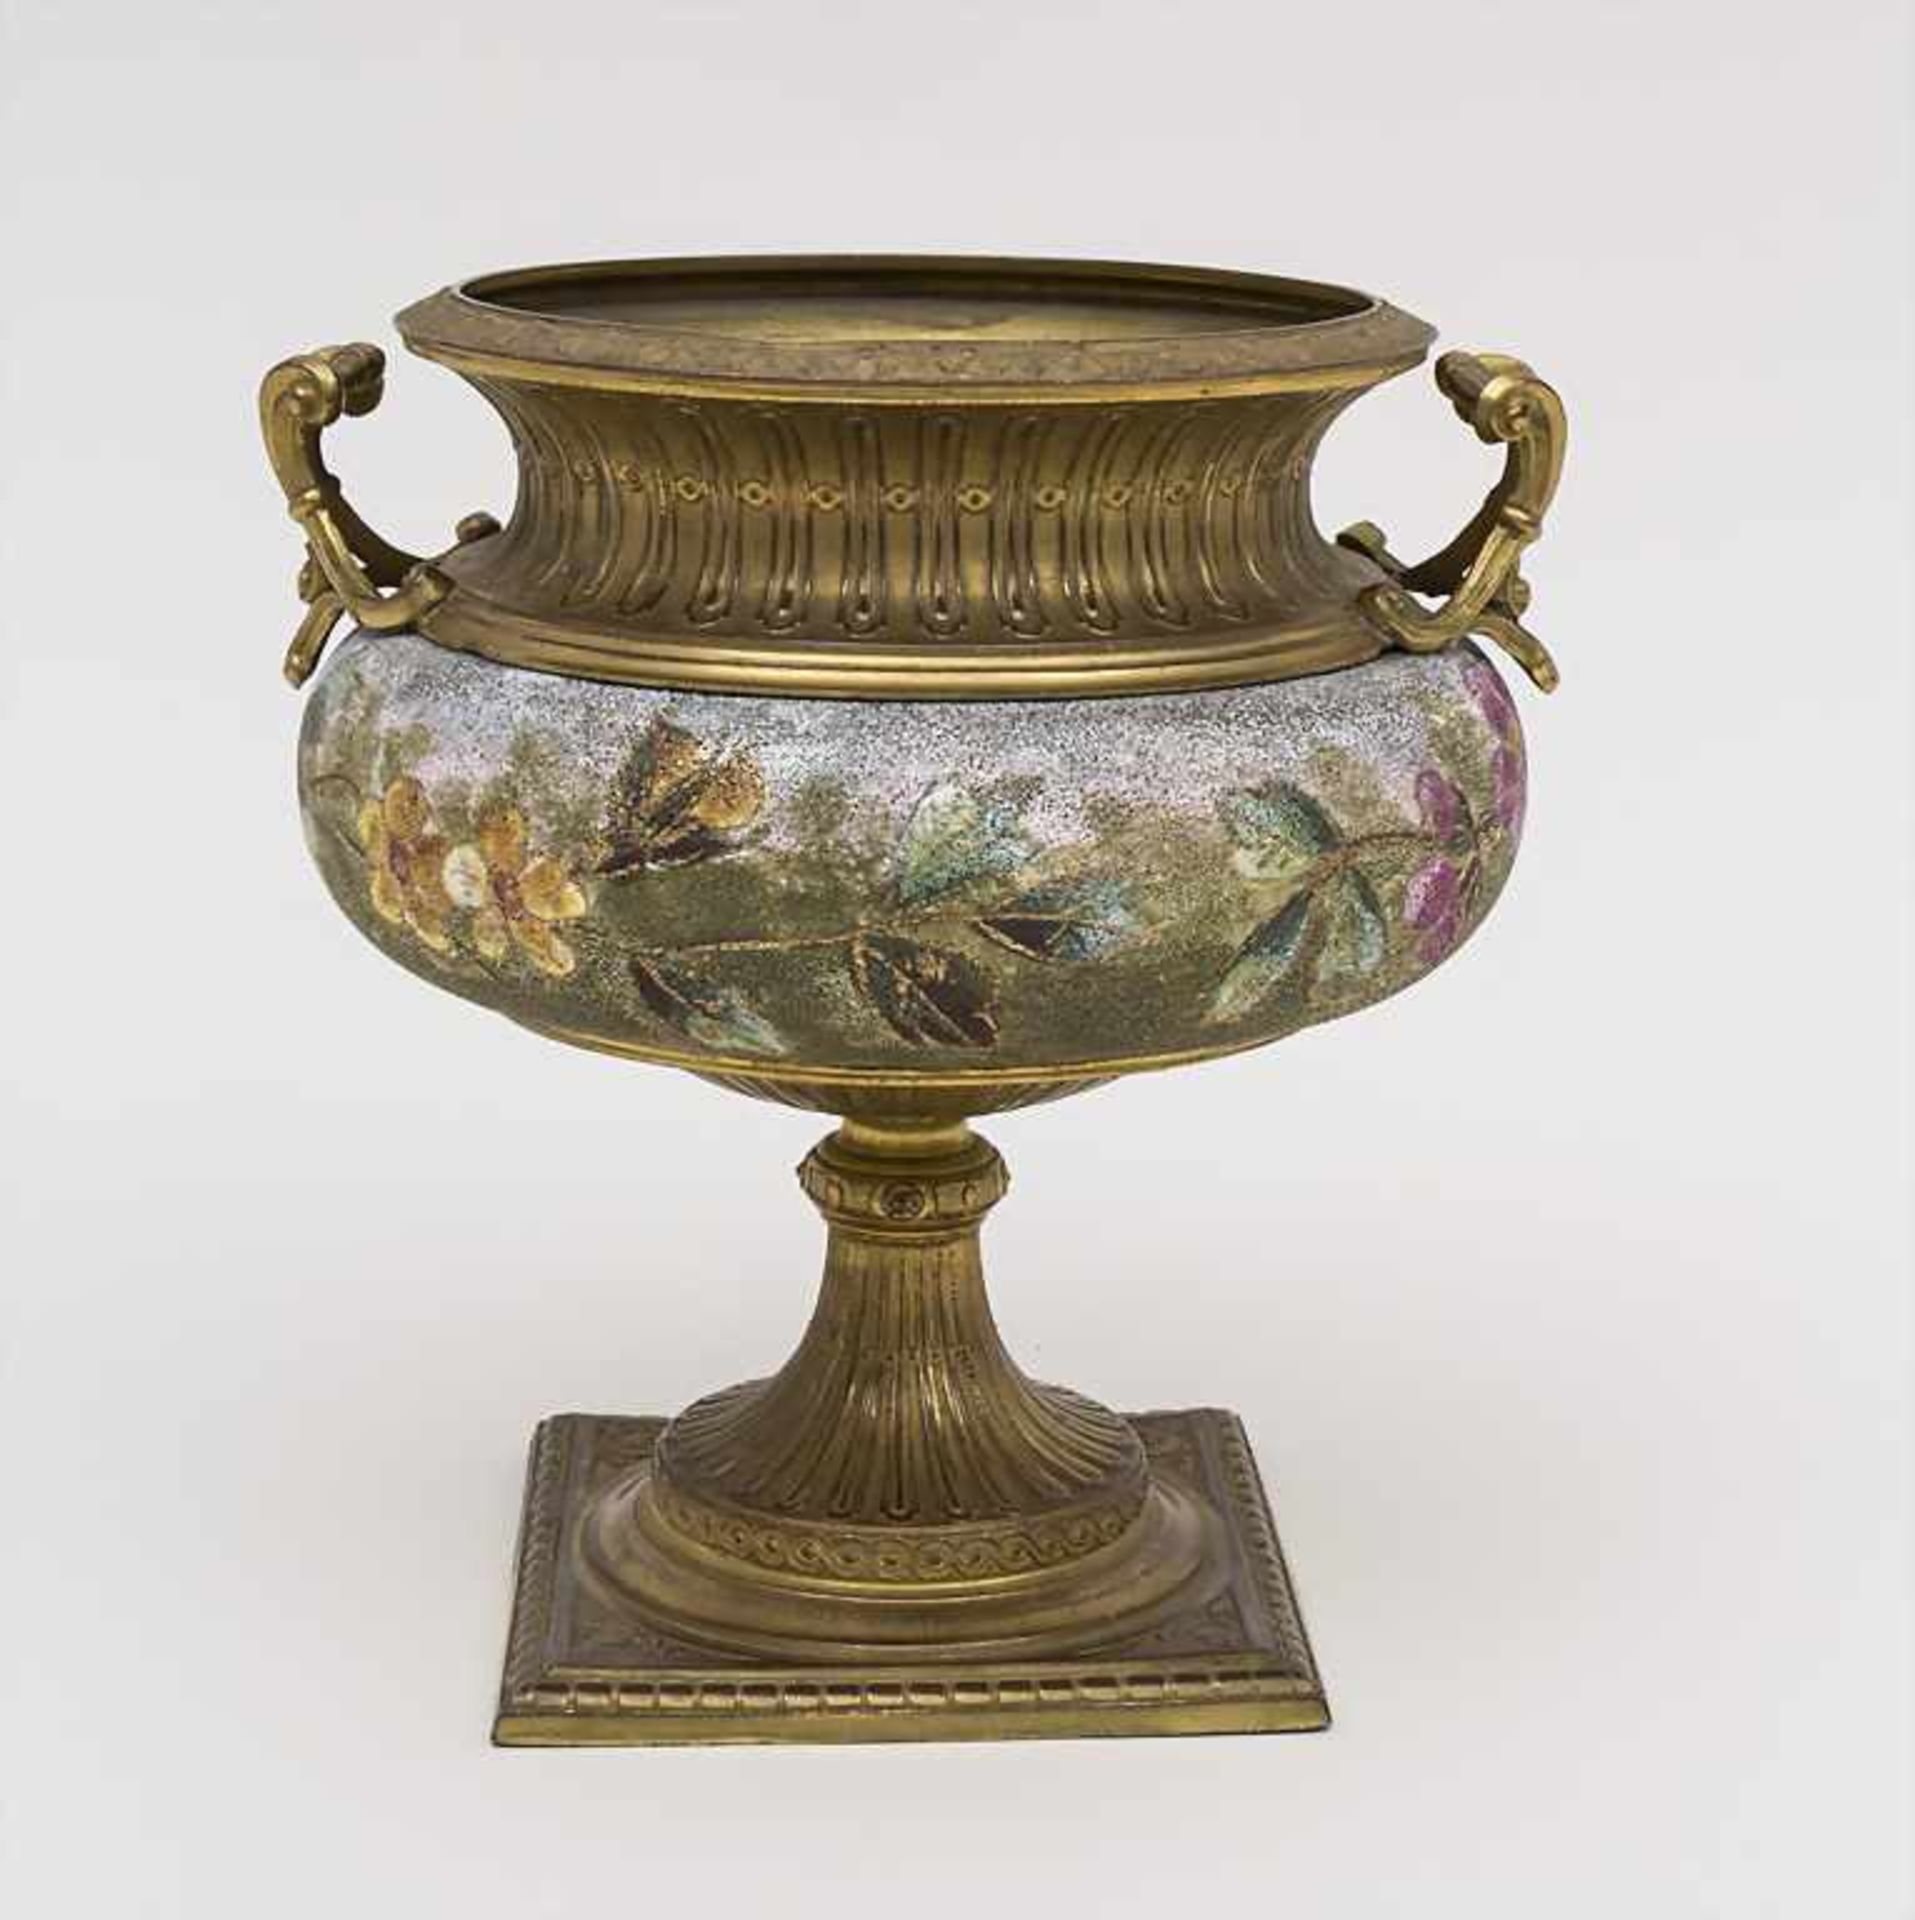 Kratervase / Vase, Frankreich Material: Keramik, polychrom bemalt, feuervergoldete Bronzemontur, - Image 2 of 2